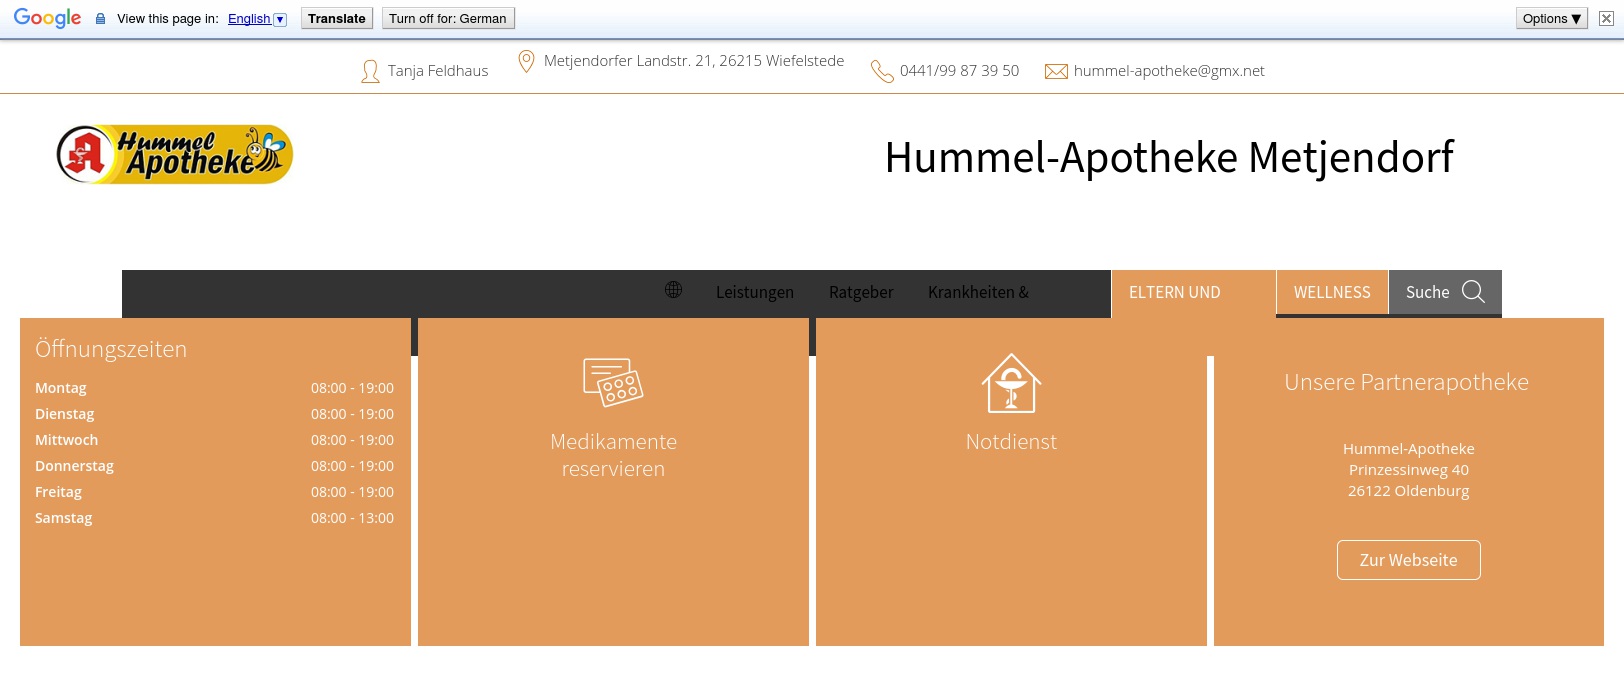 Hummel-Apotheke